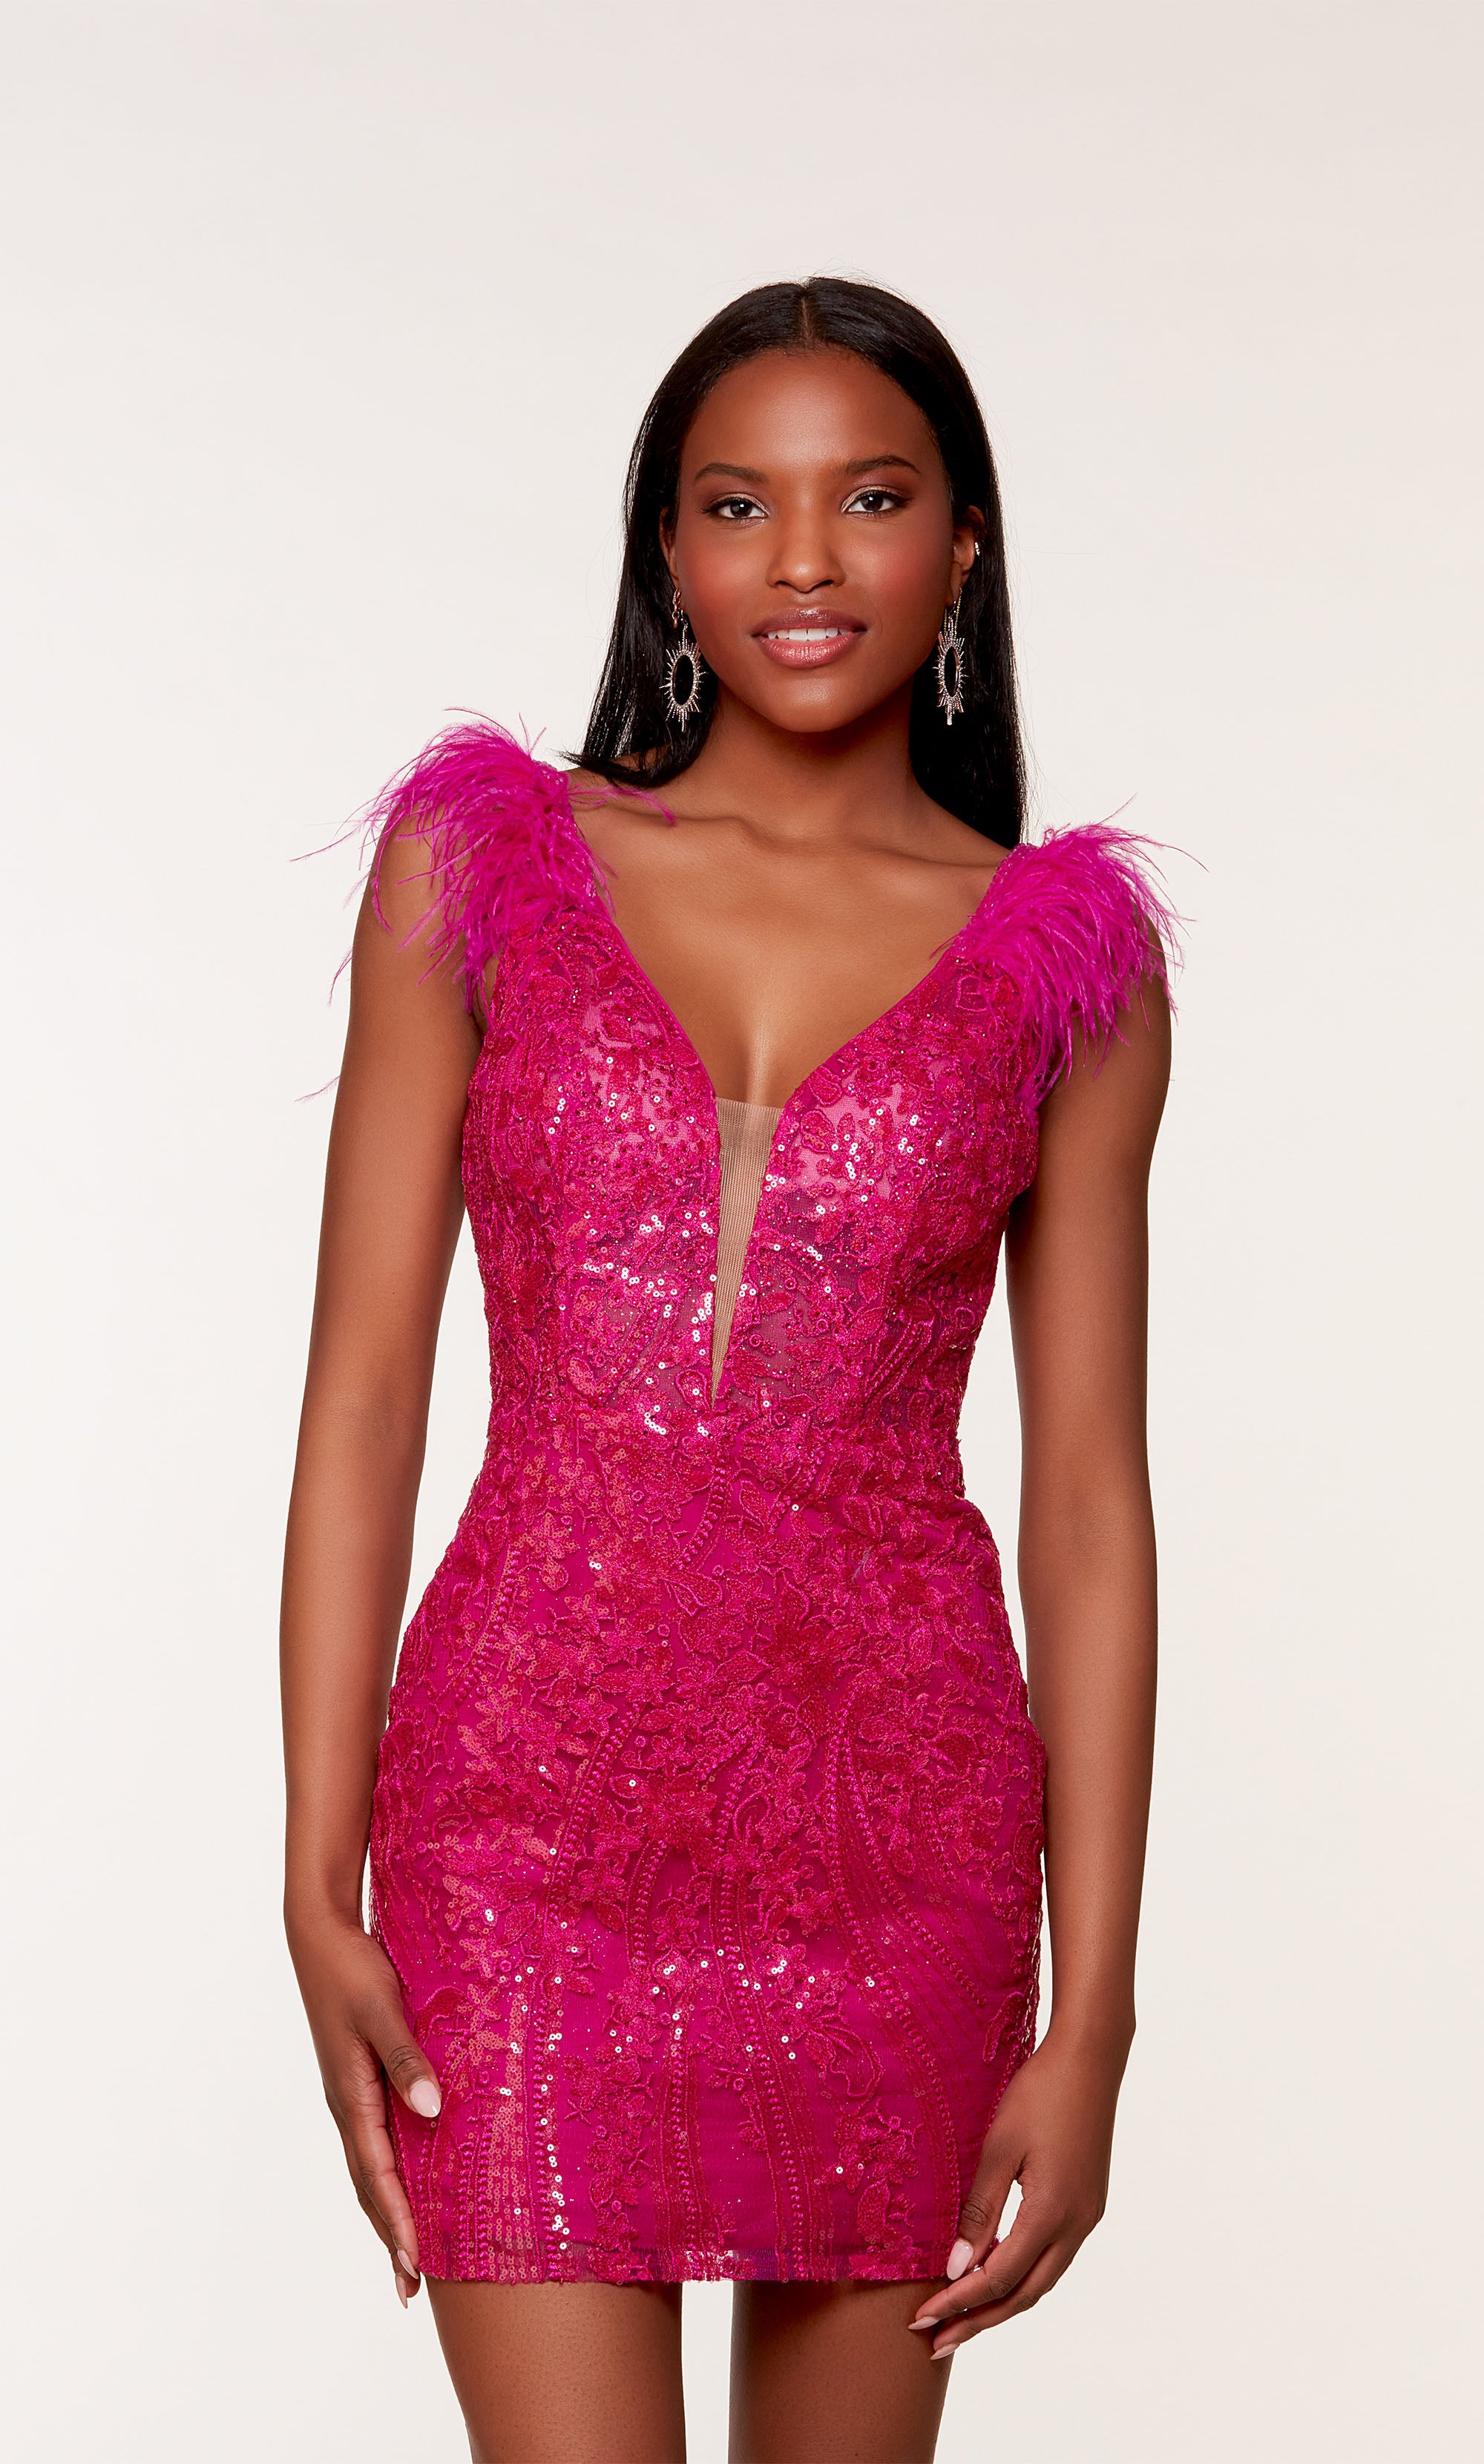 hot pink cocktail dress